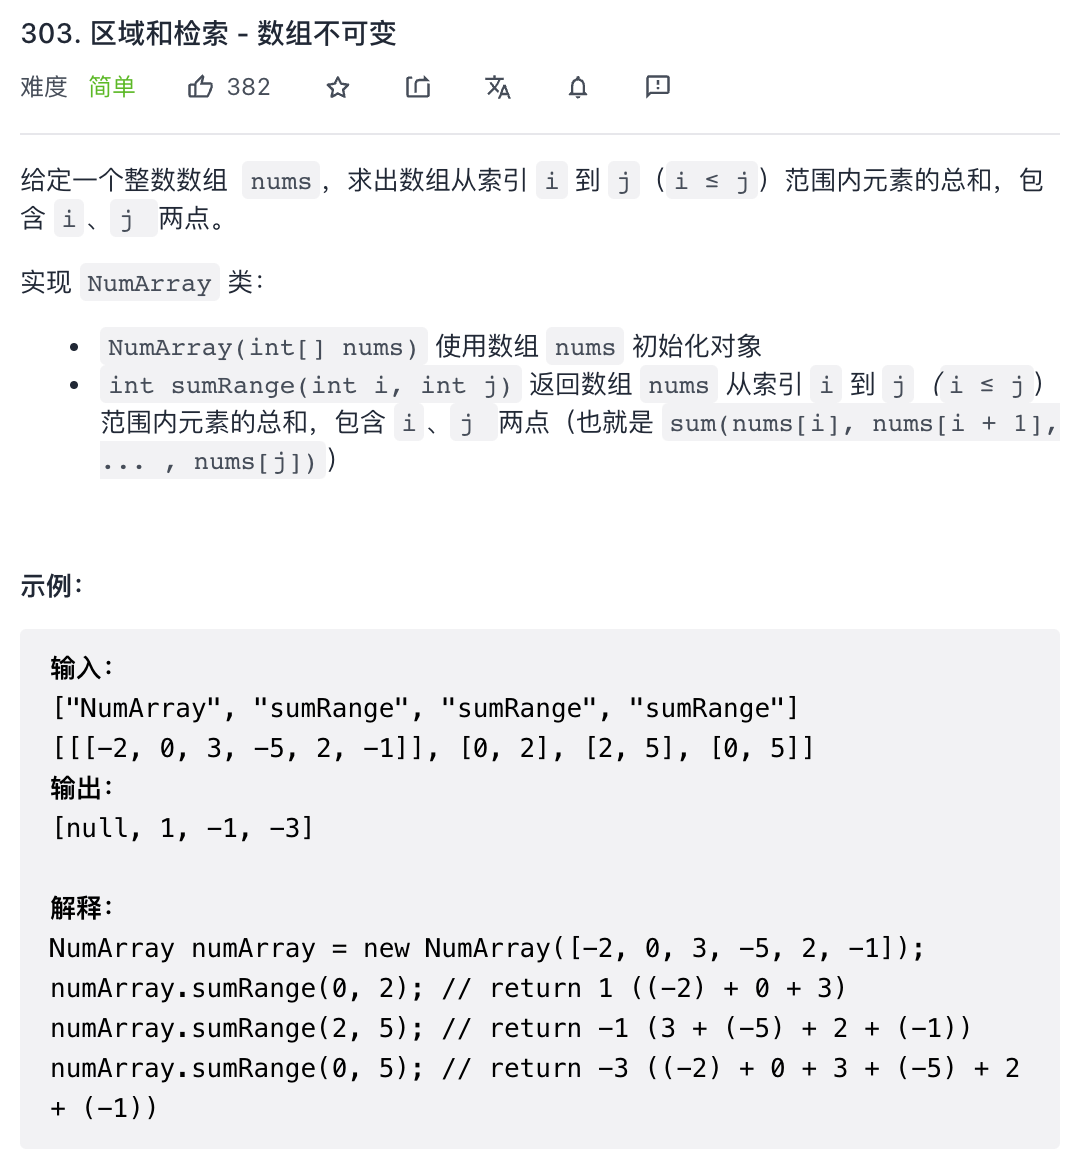 [leetcode 303题](https://leetcode.cn/problems/range-sum-query-immutable/)